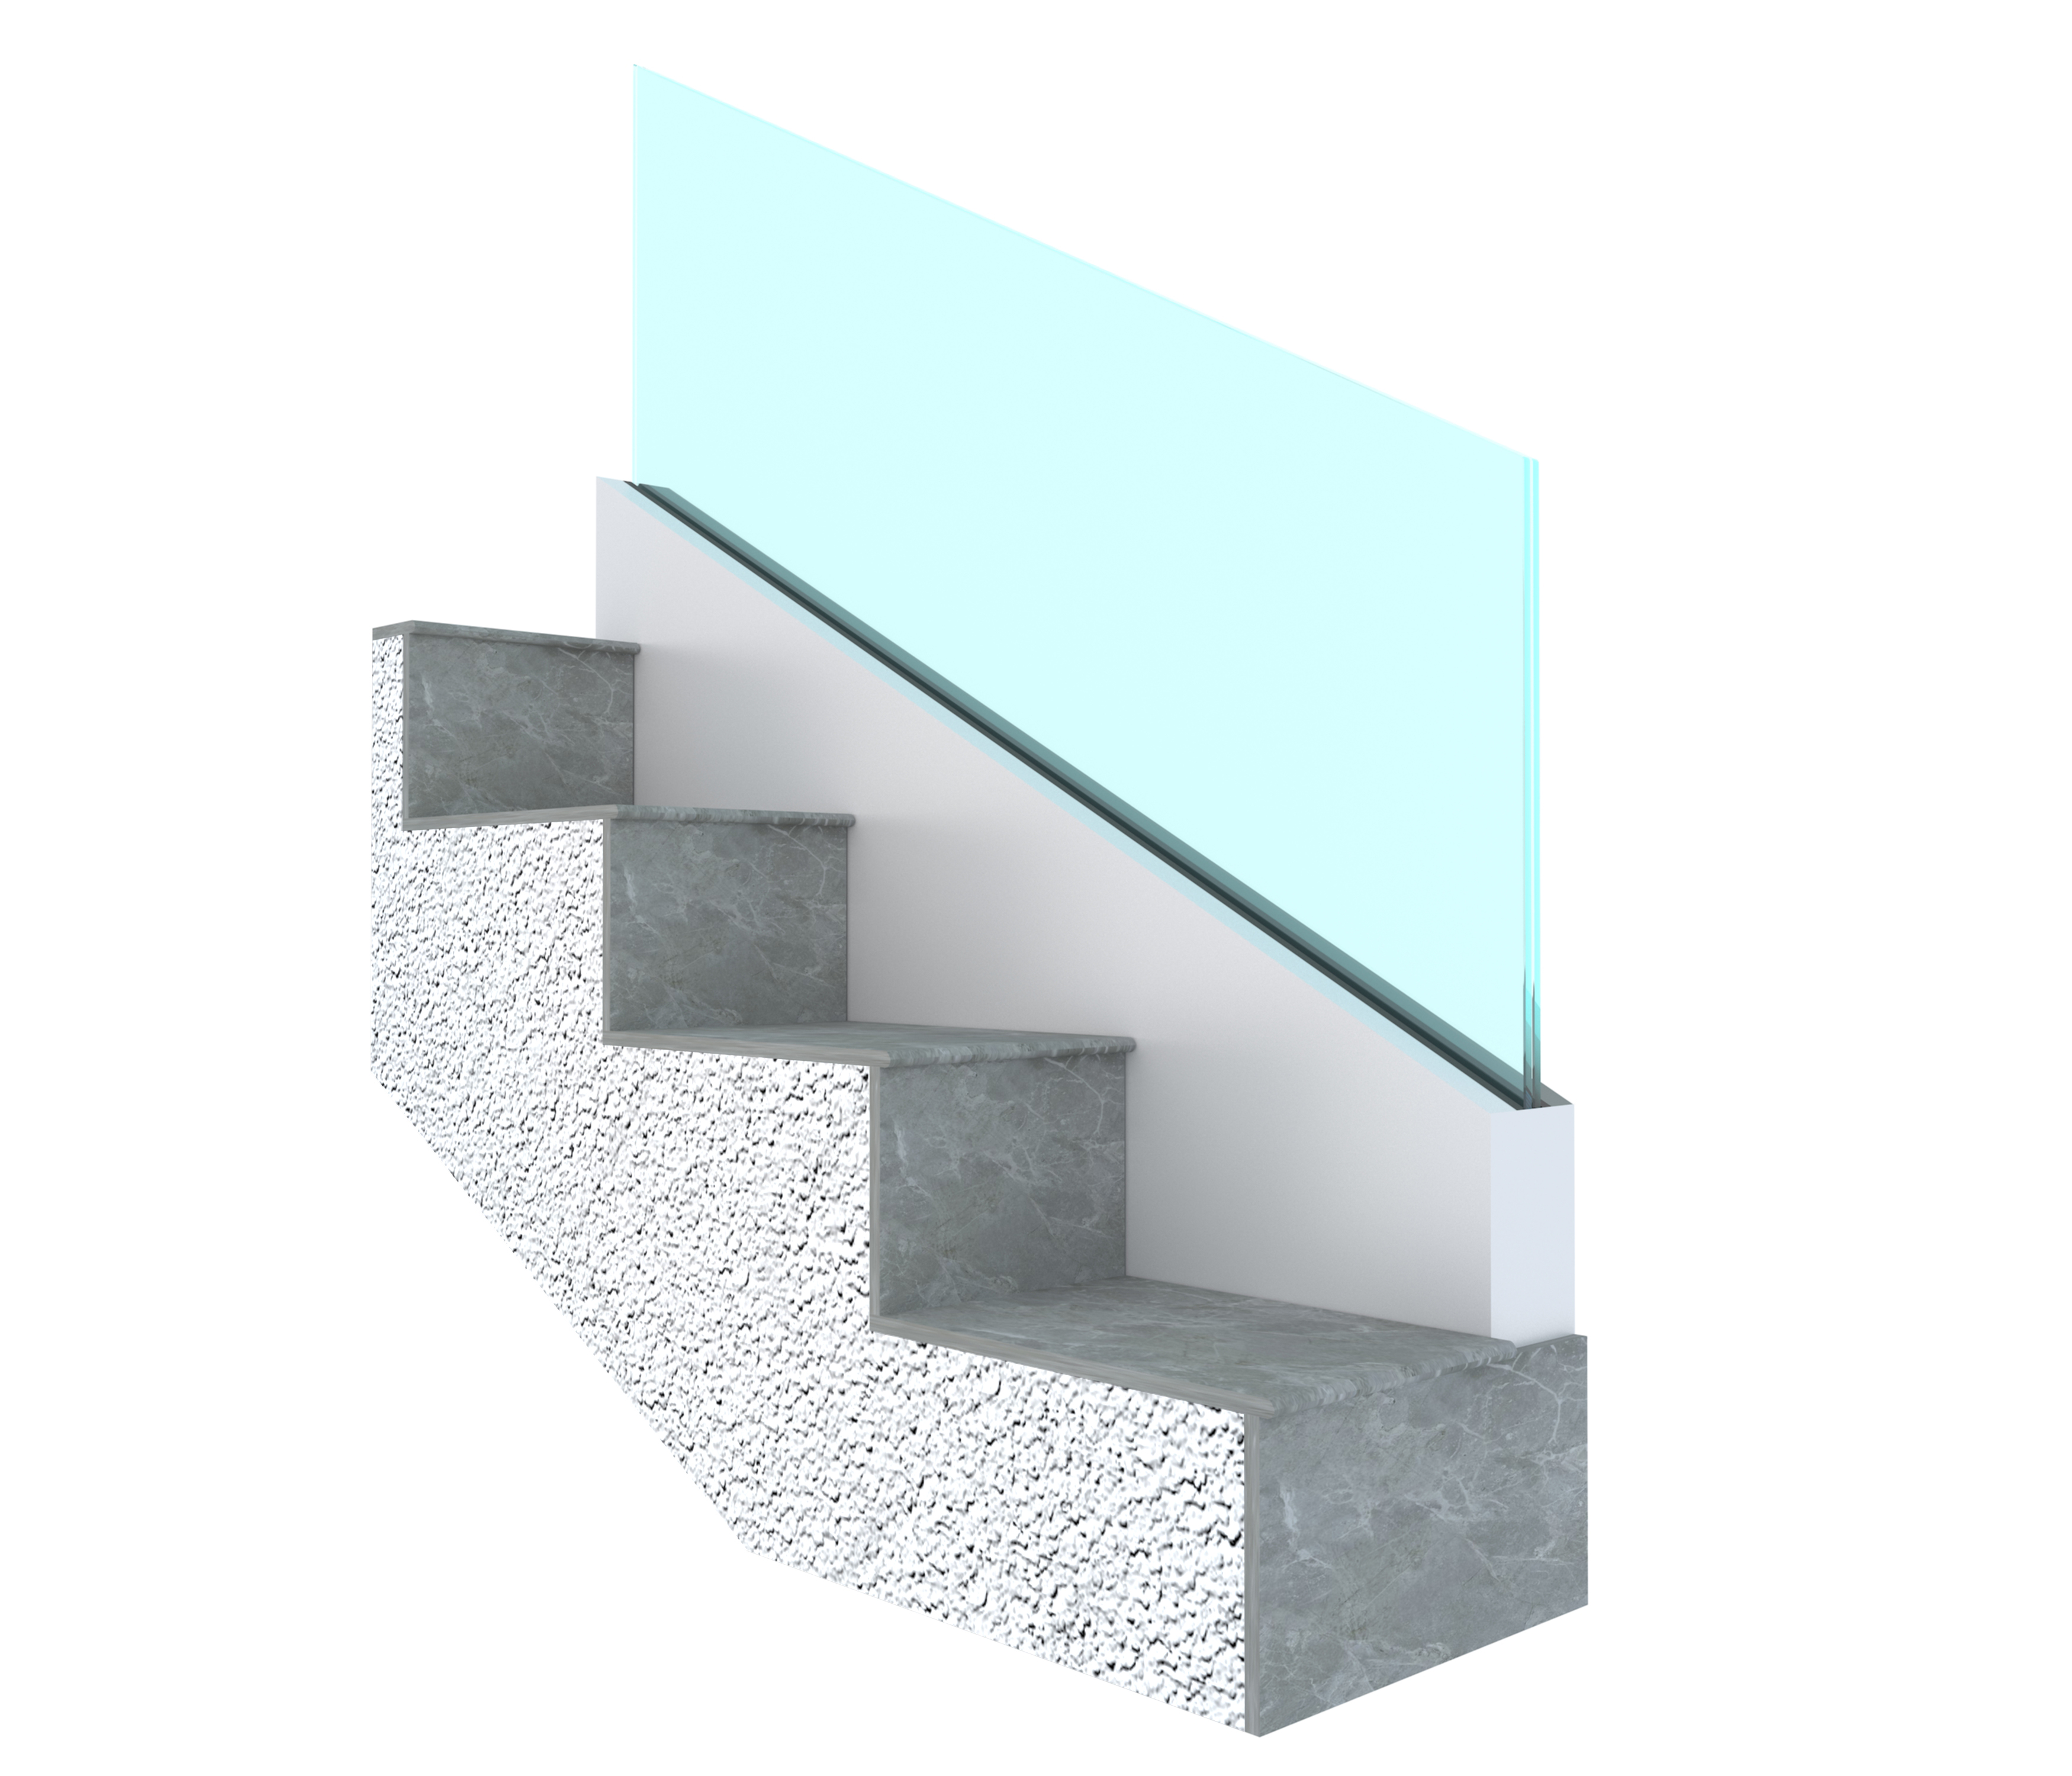 Merdiven üzeri metal panel kaplama